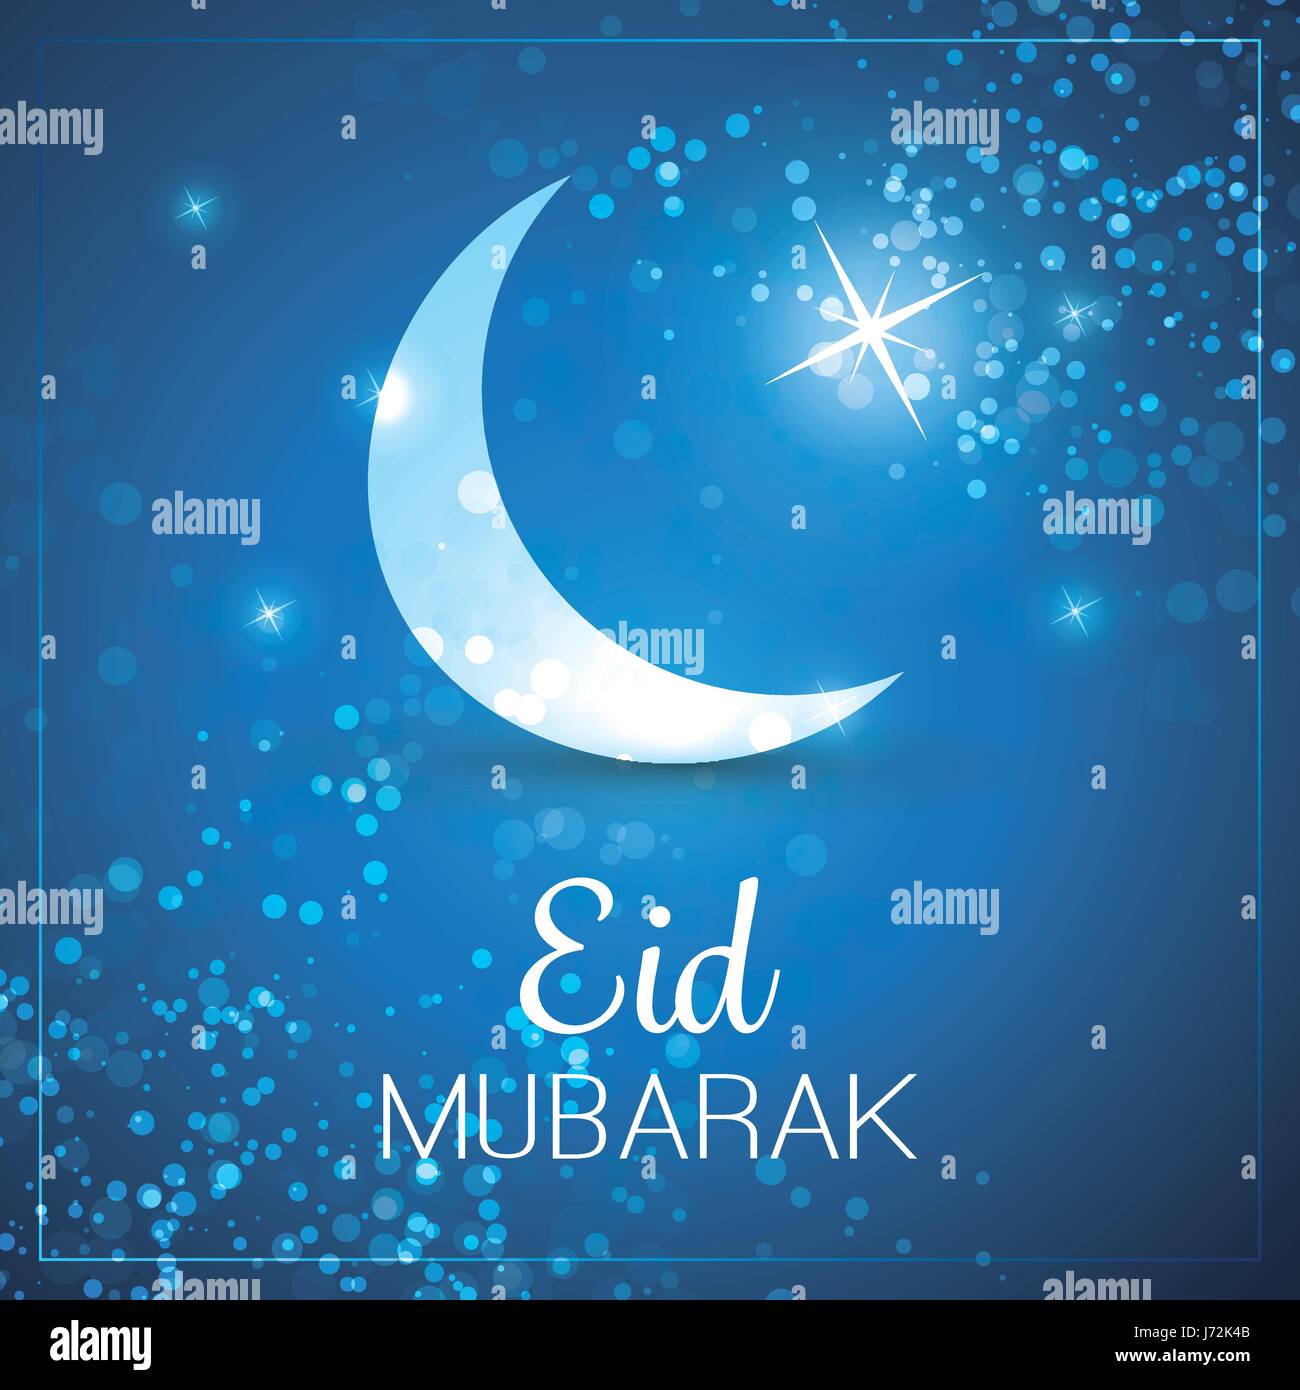 Eid Mubarak - Moon in the Sky - Greeting Card for Muslim 